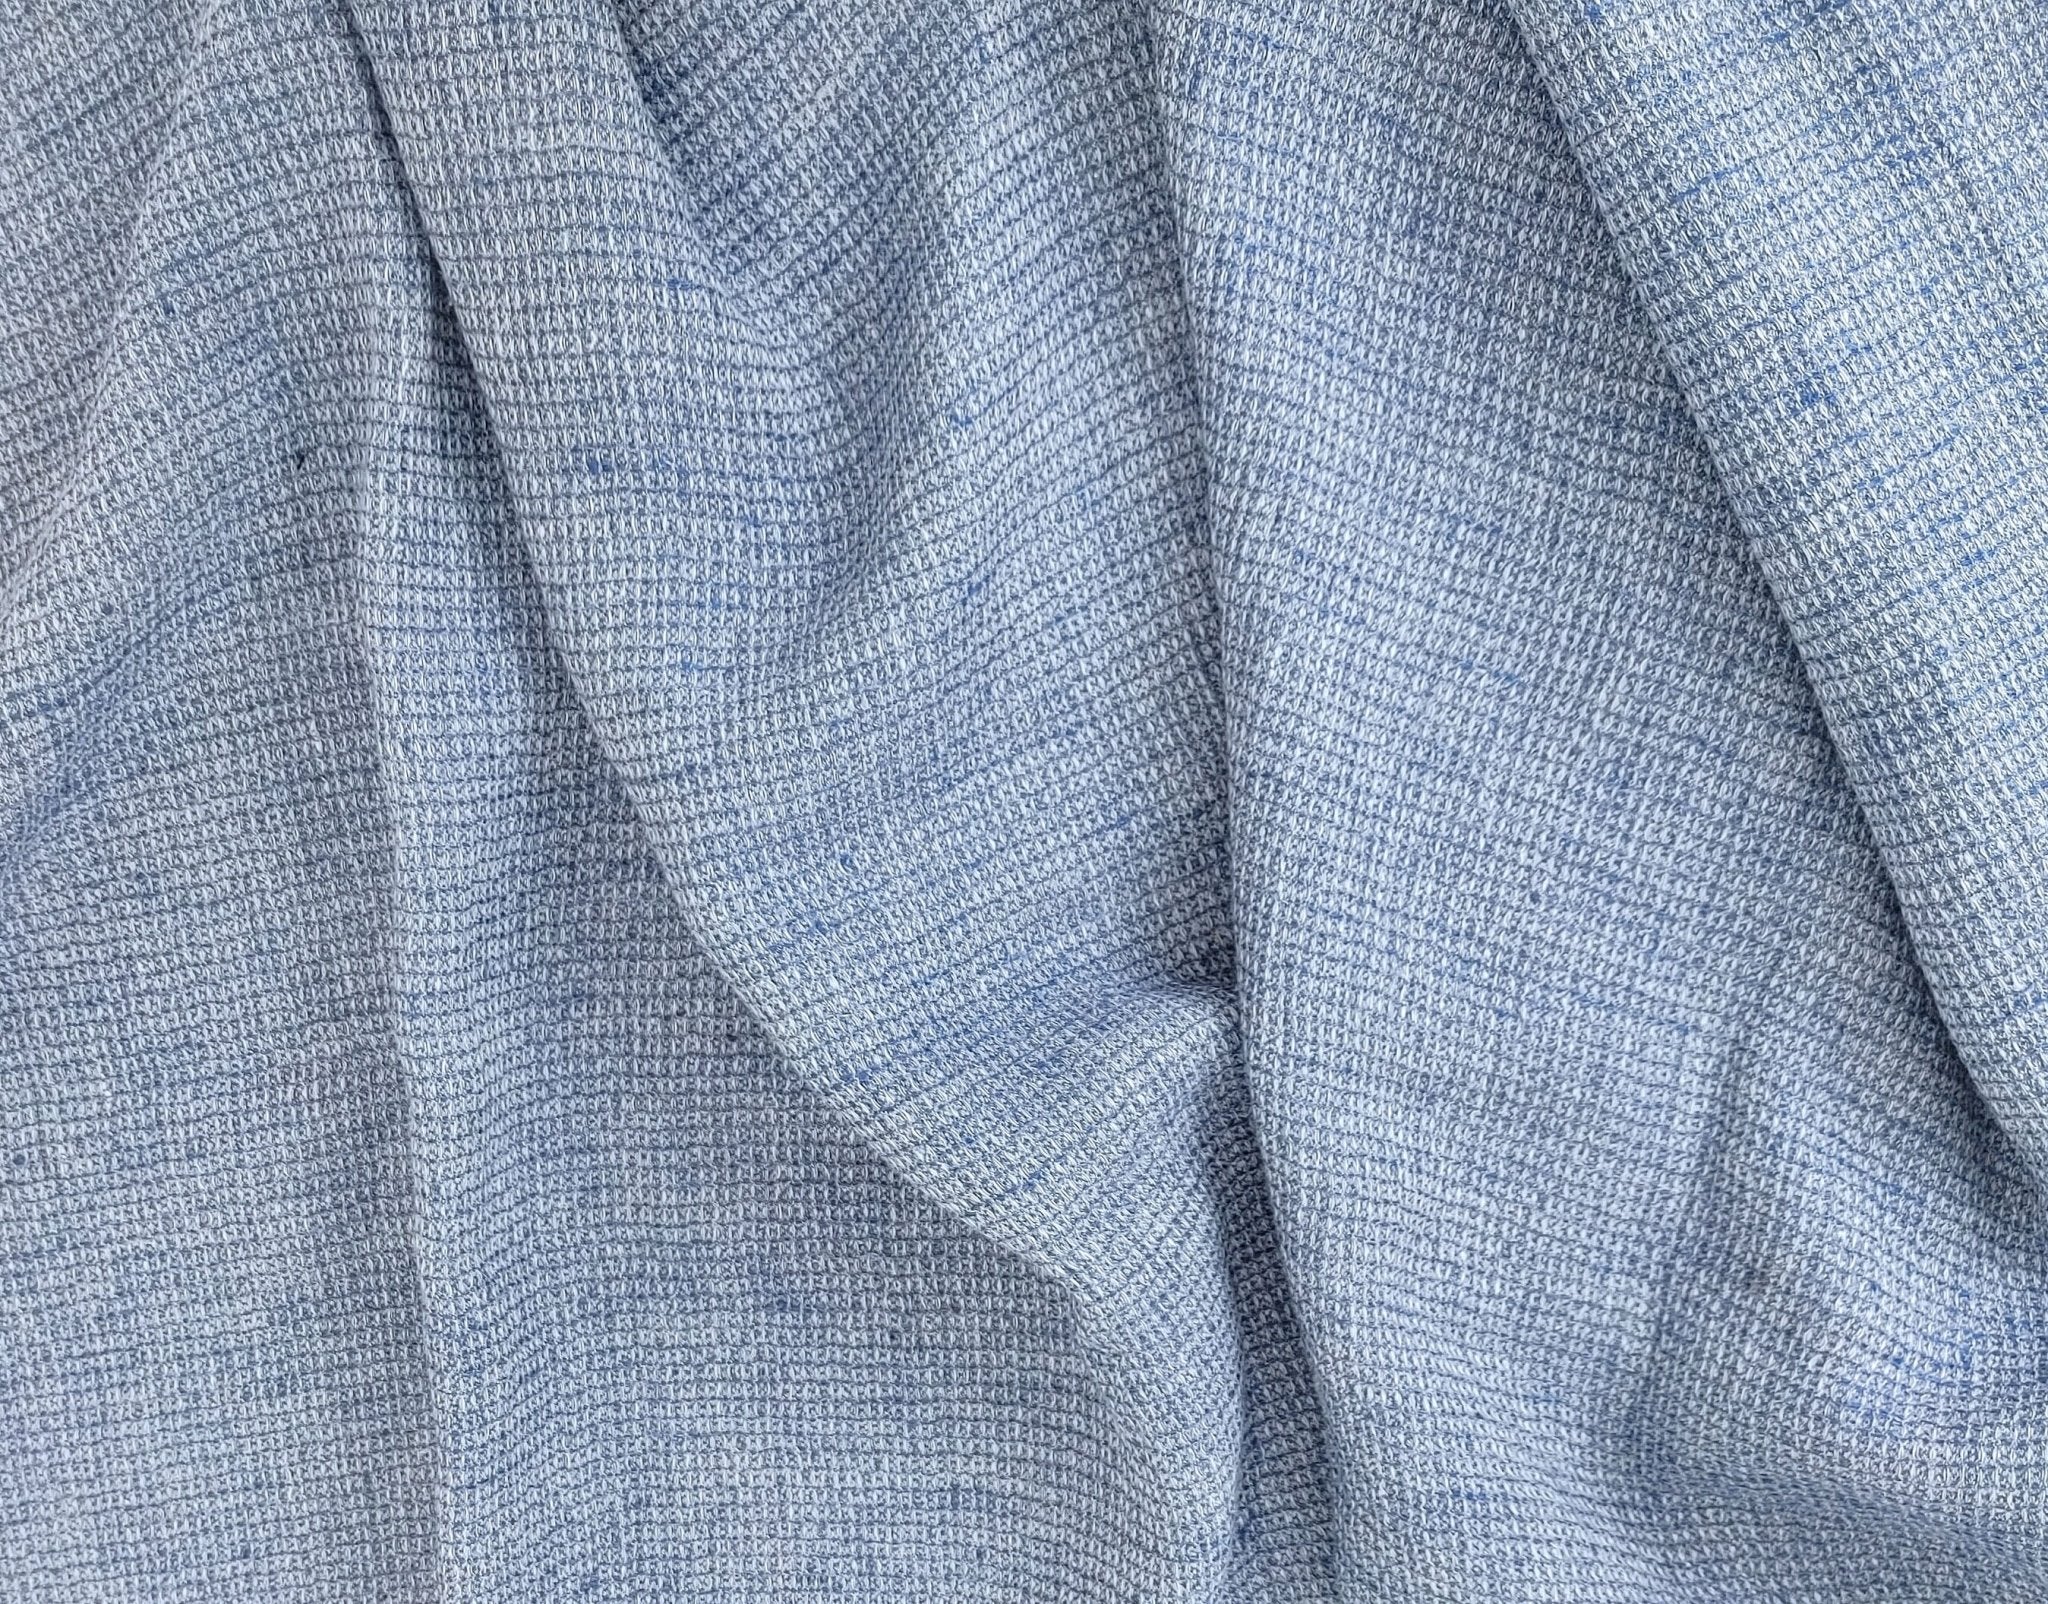 Cloud 9 100% Linen Waffle Tweed Fabric 7876 7877 7878 7879 7880 - The Linen Lab - Blue(Dark)